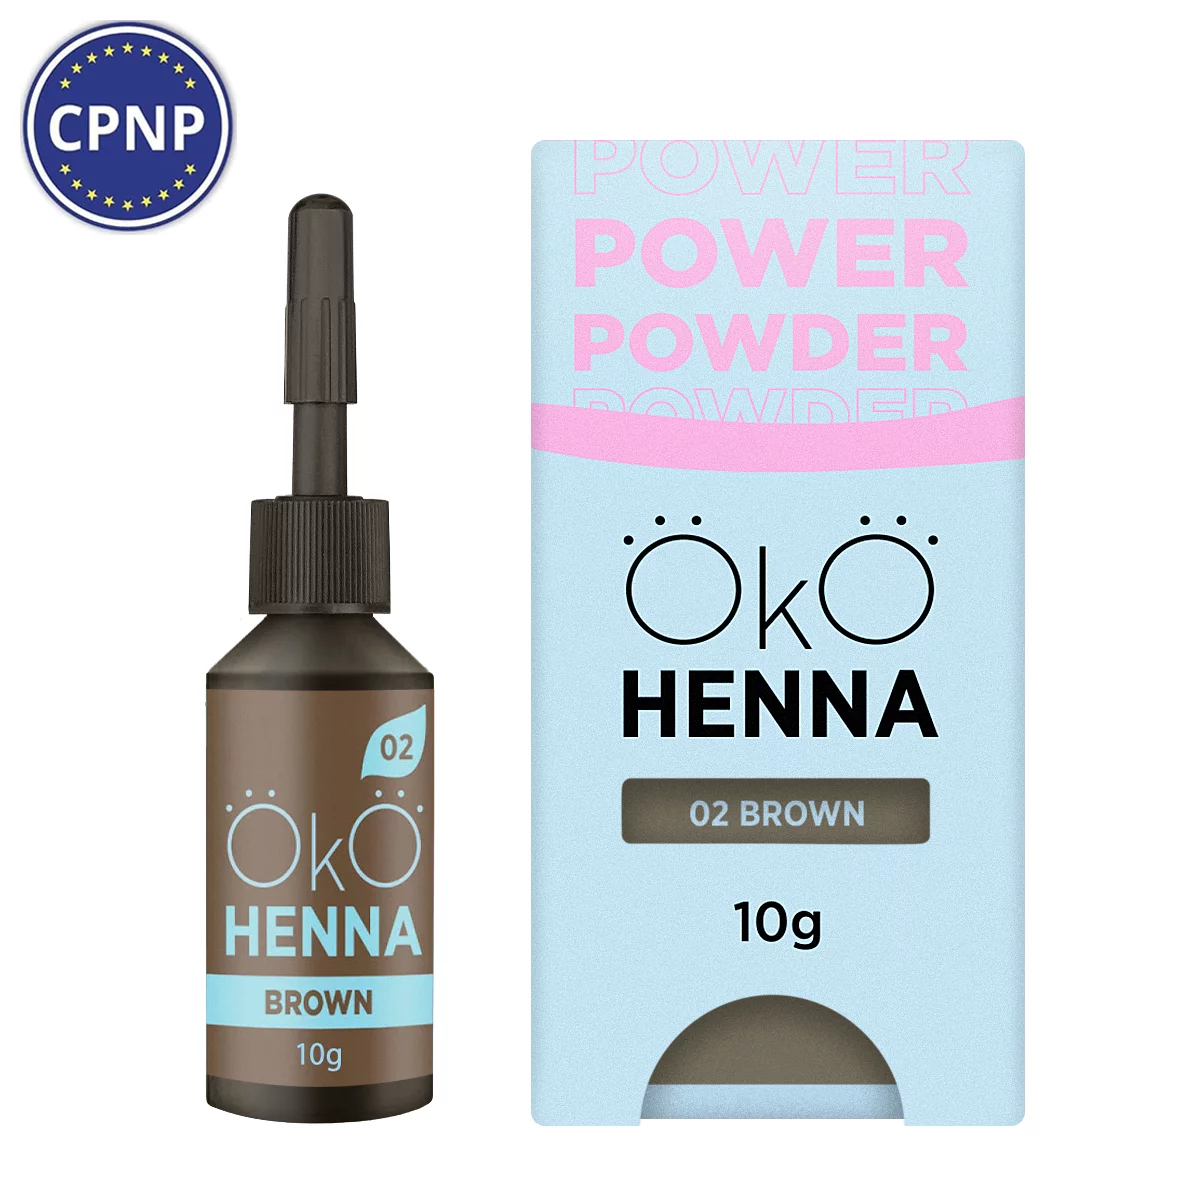 Къна за вежди OKO Power Powder, 02 Brown, 10g